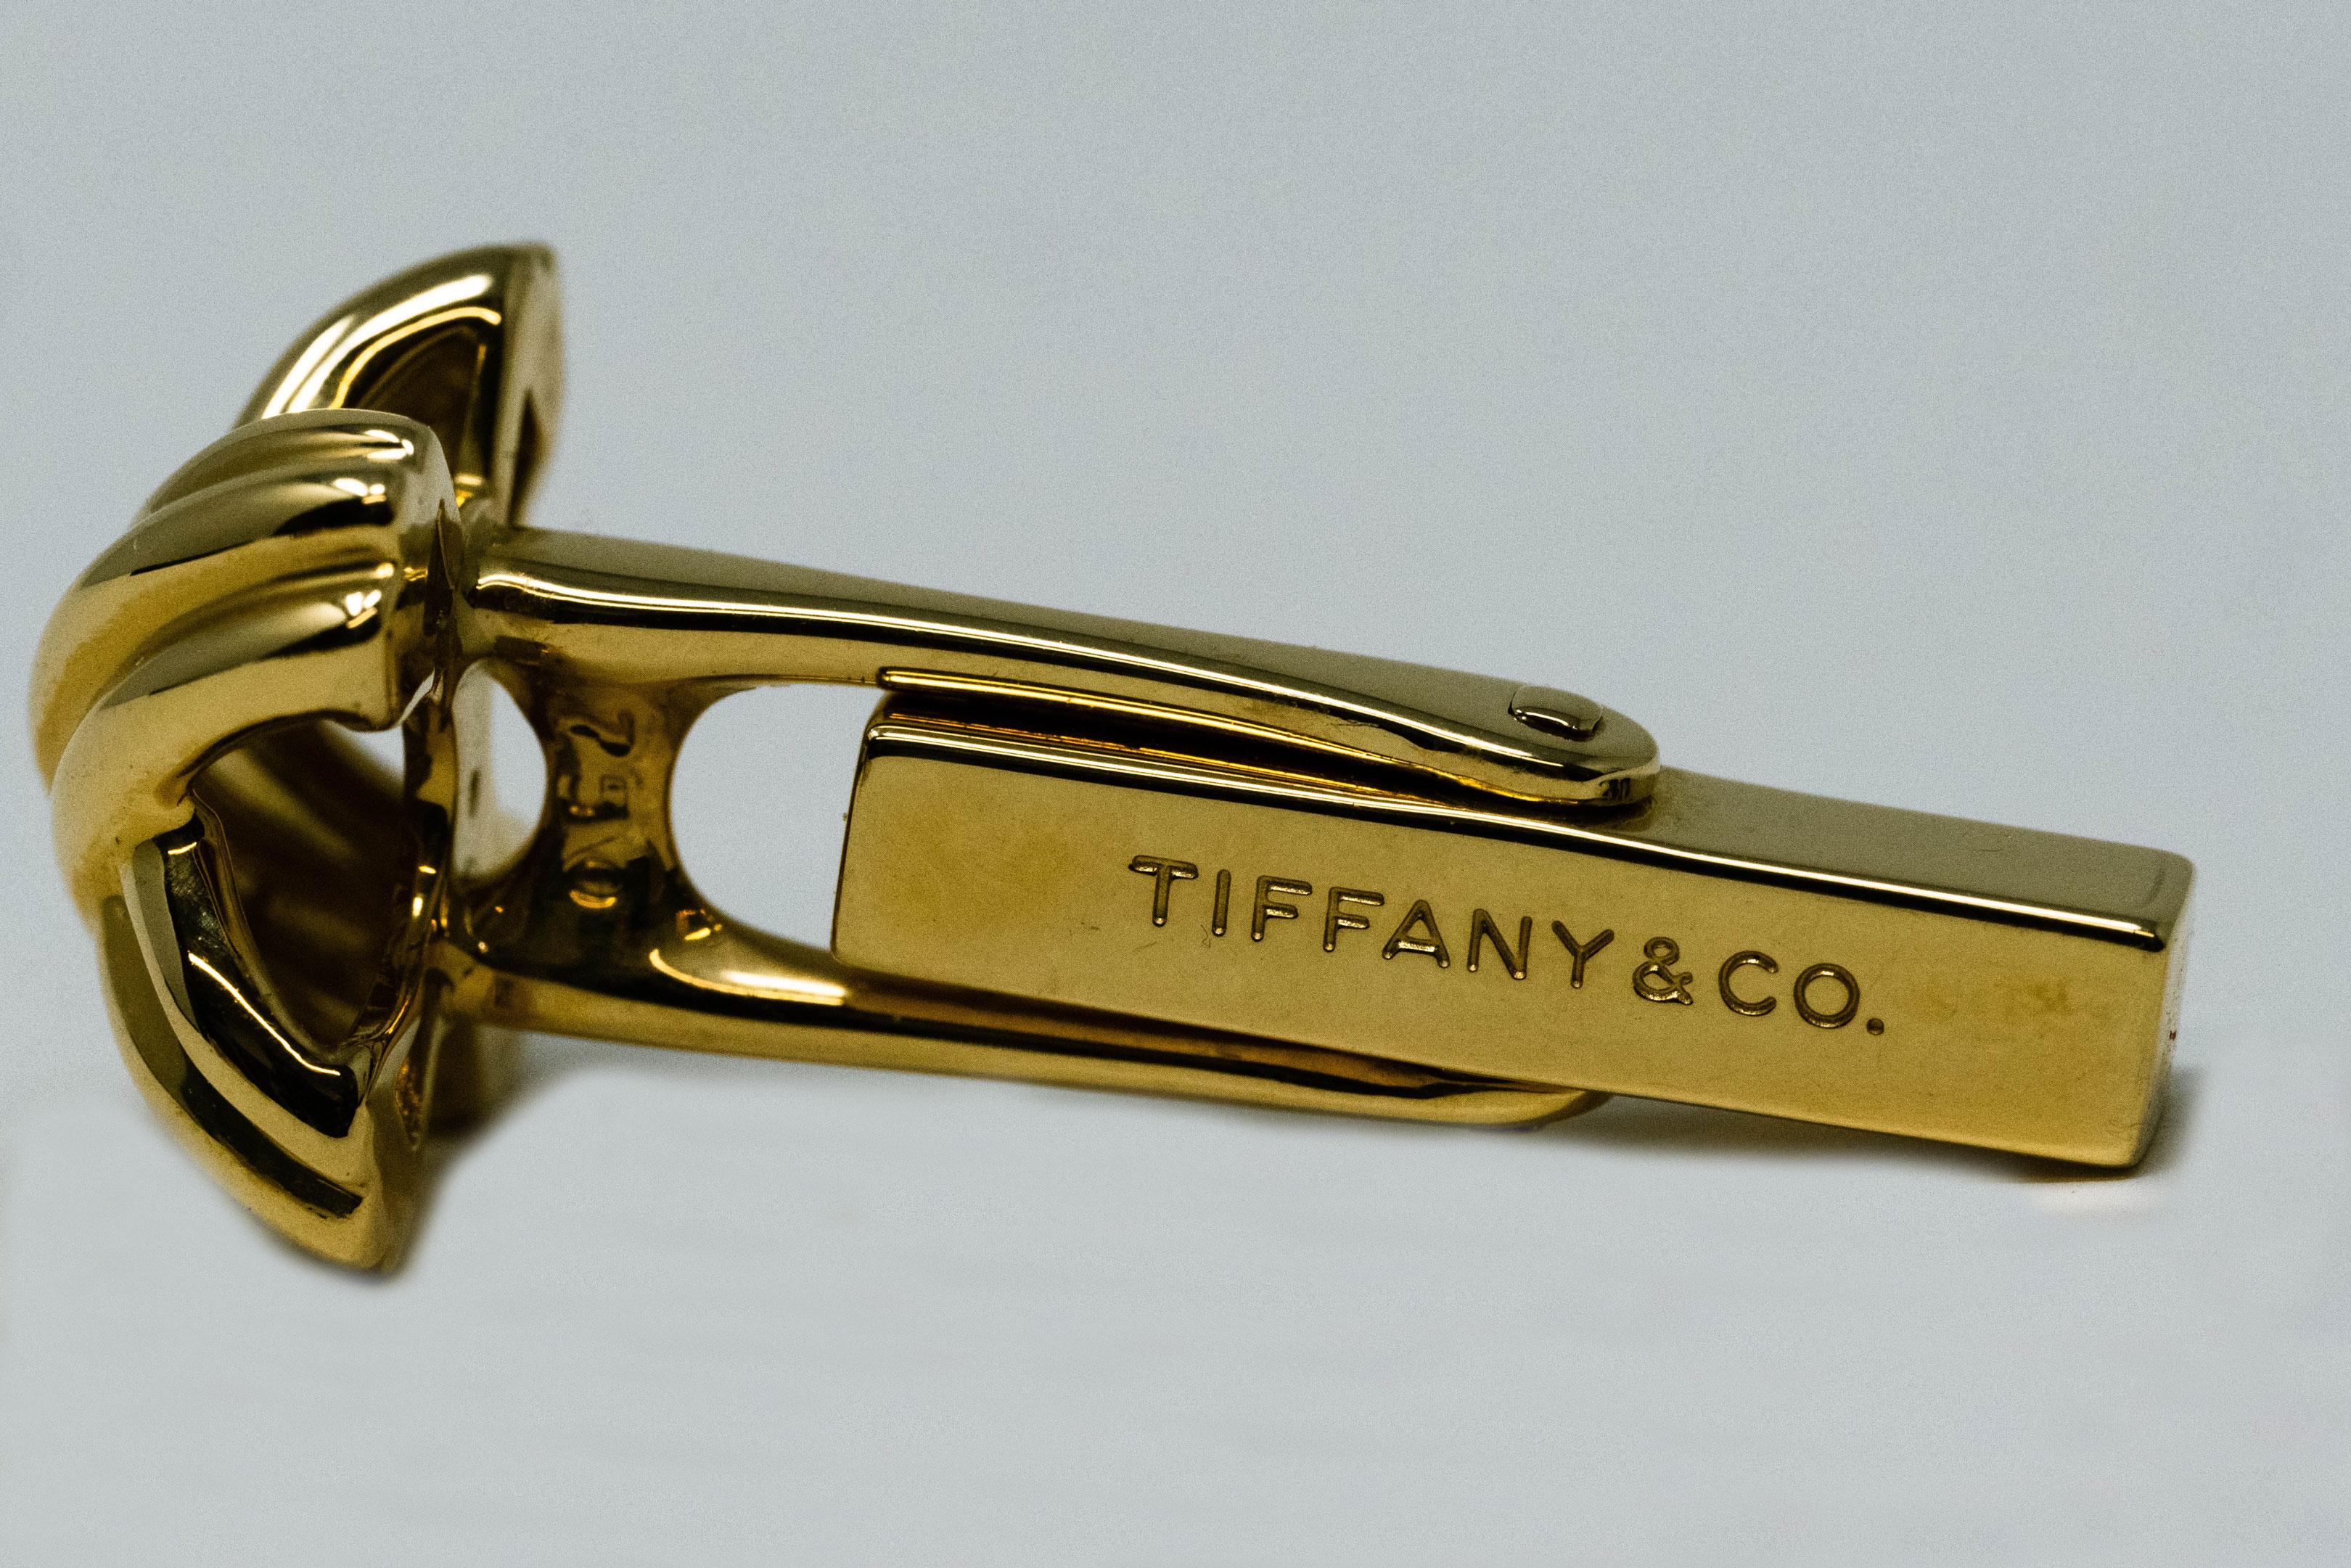 Modern Tiffany & Co. 18k Yellow Gold Cufflinks with Box